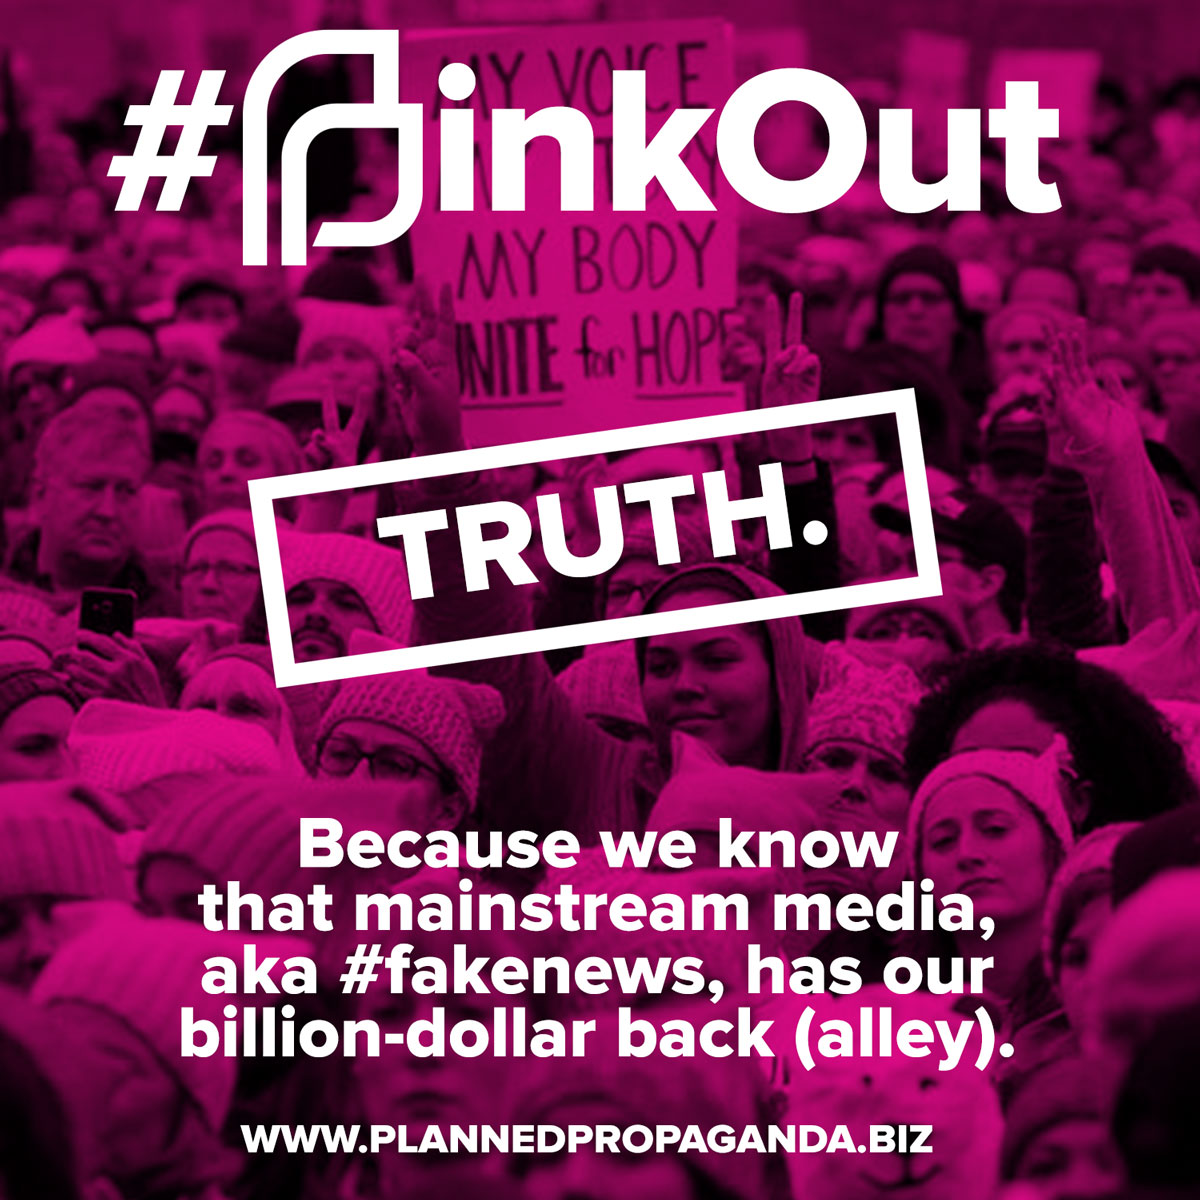 #PINKOUT: #FakeNews Has Our Back